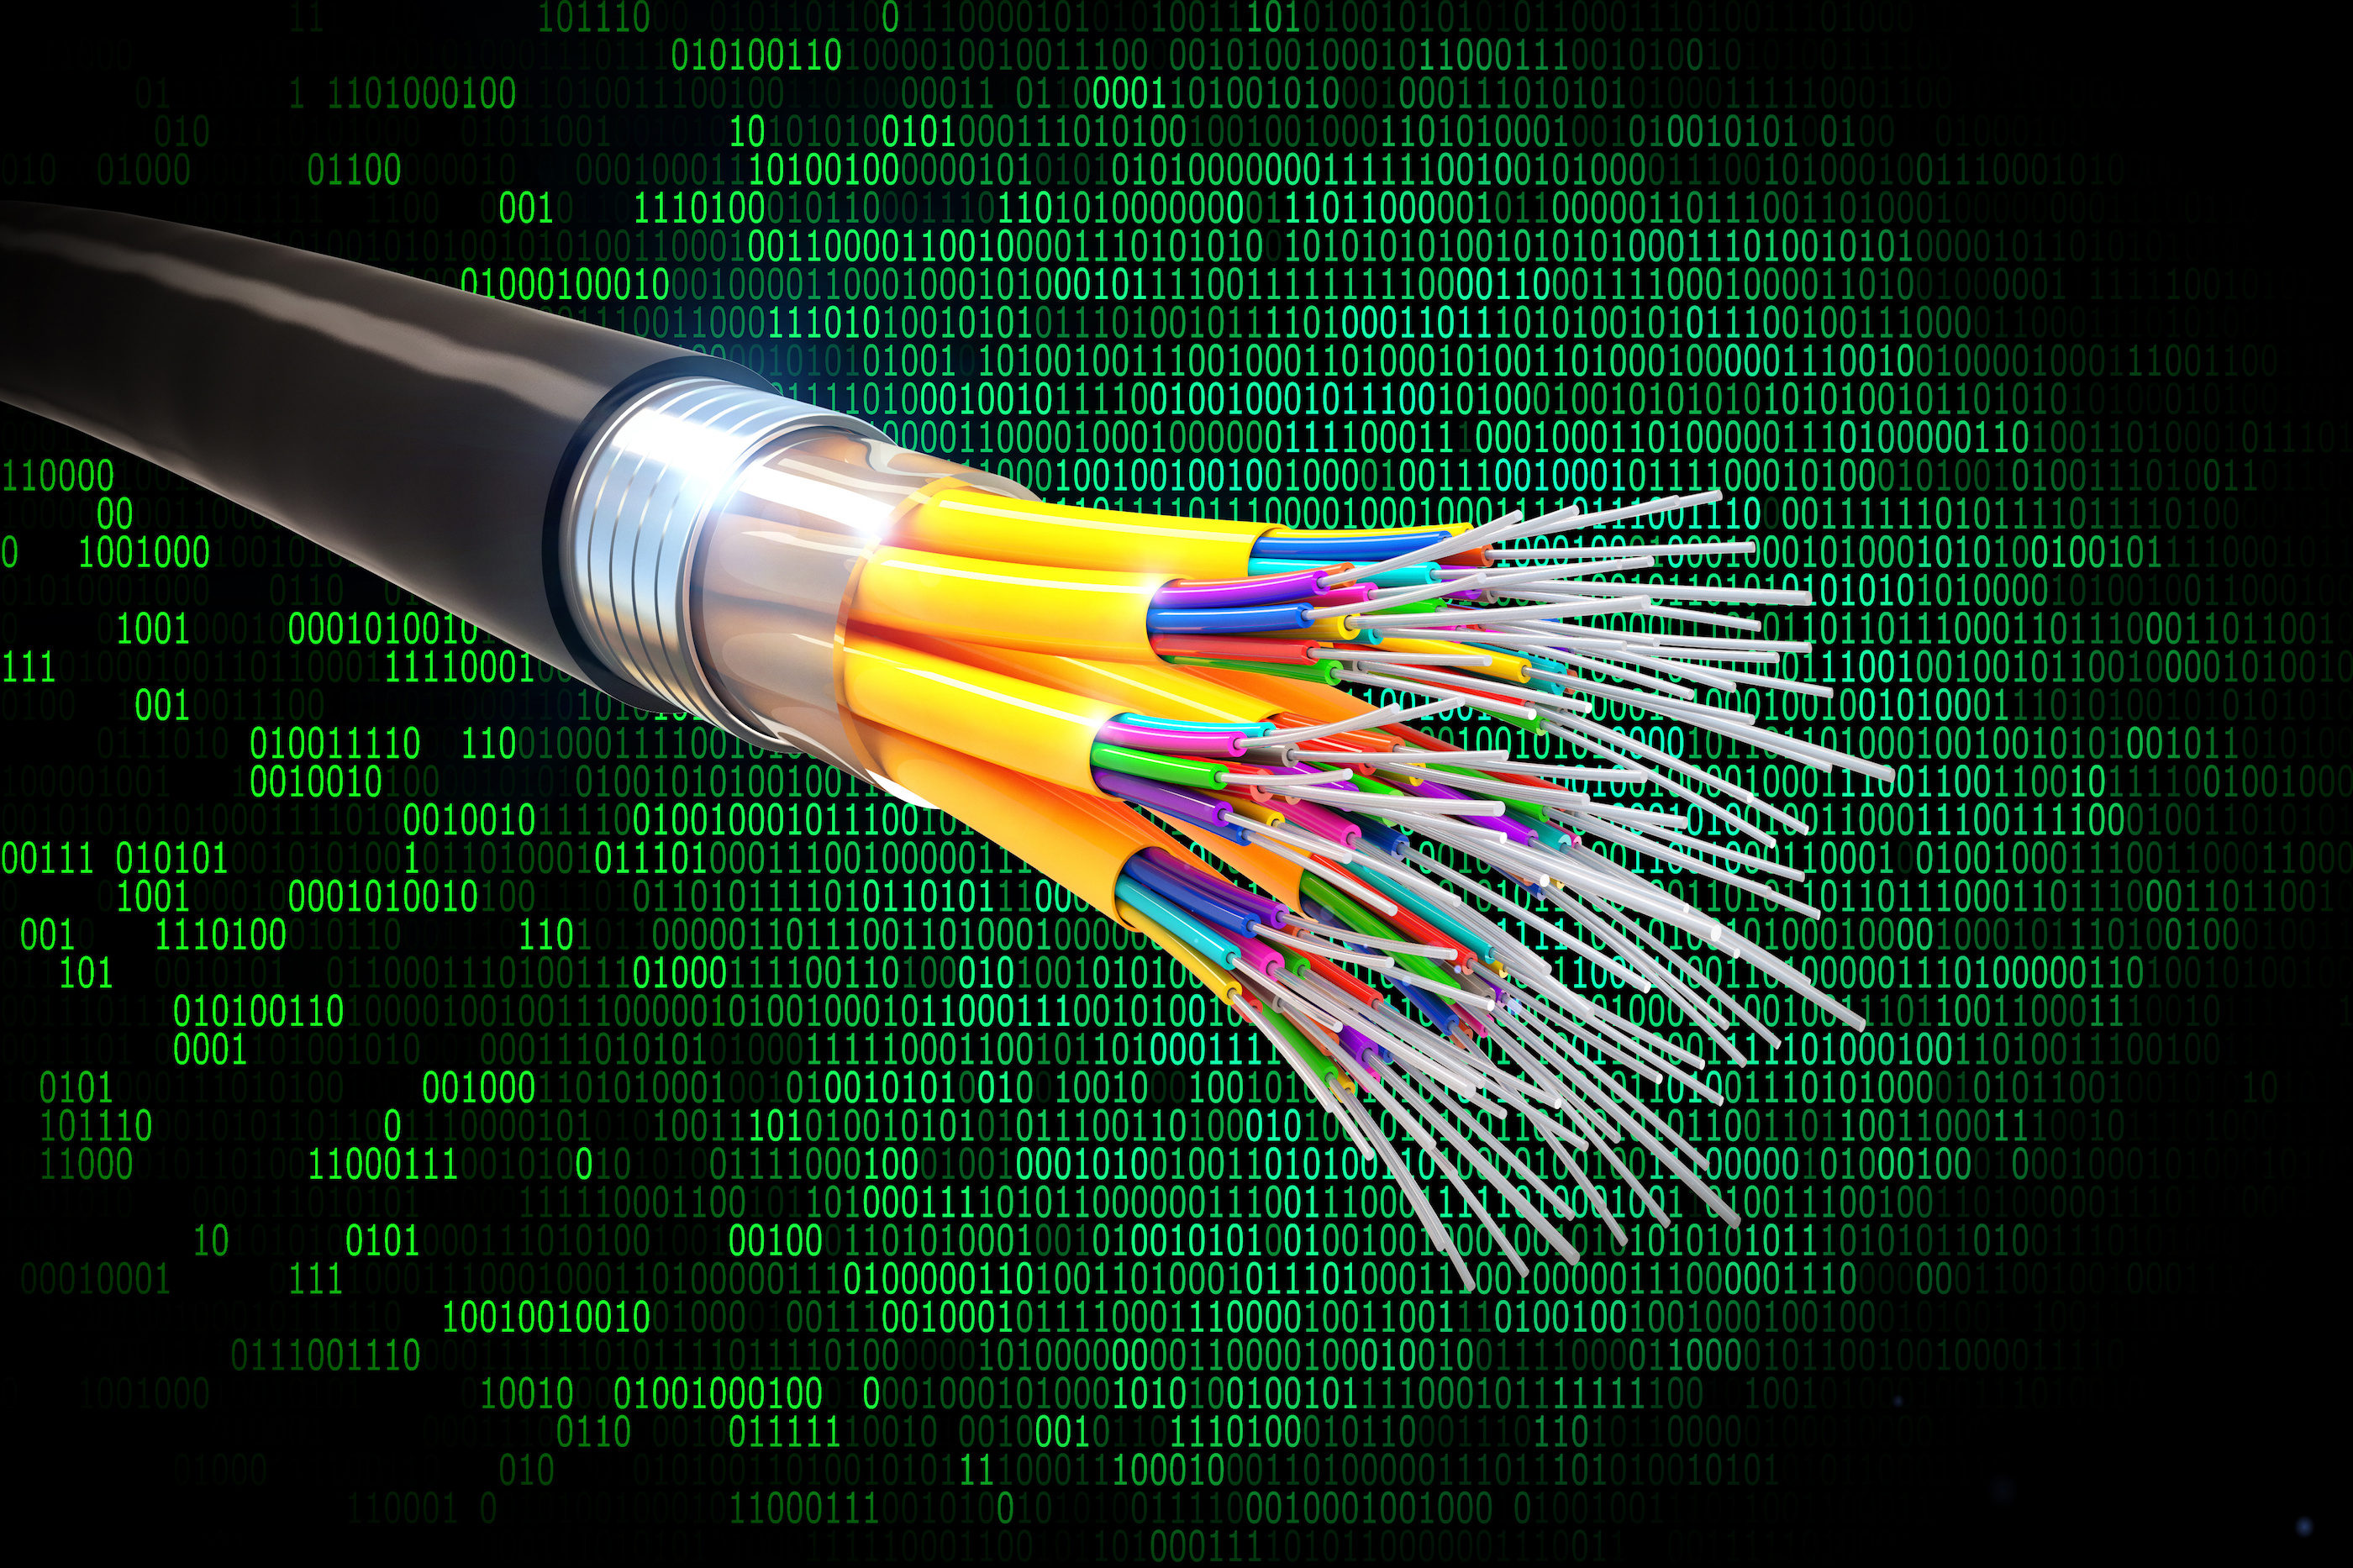 fiber optic cable uses